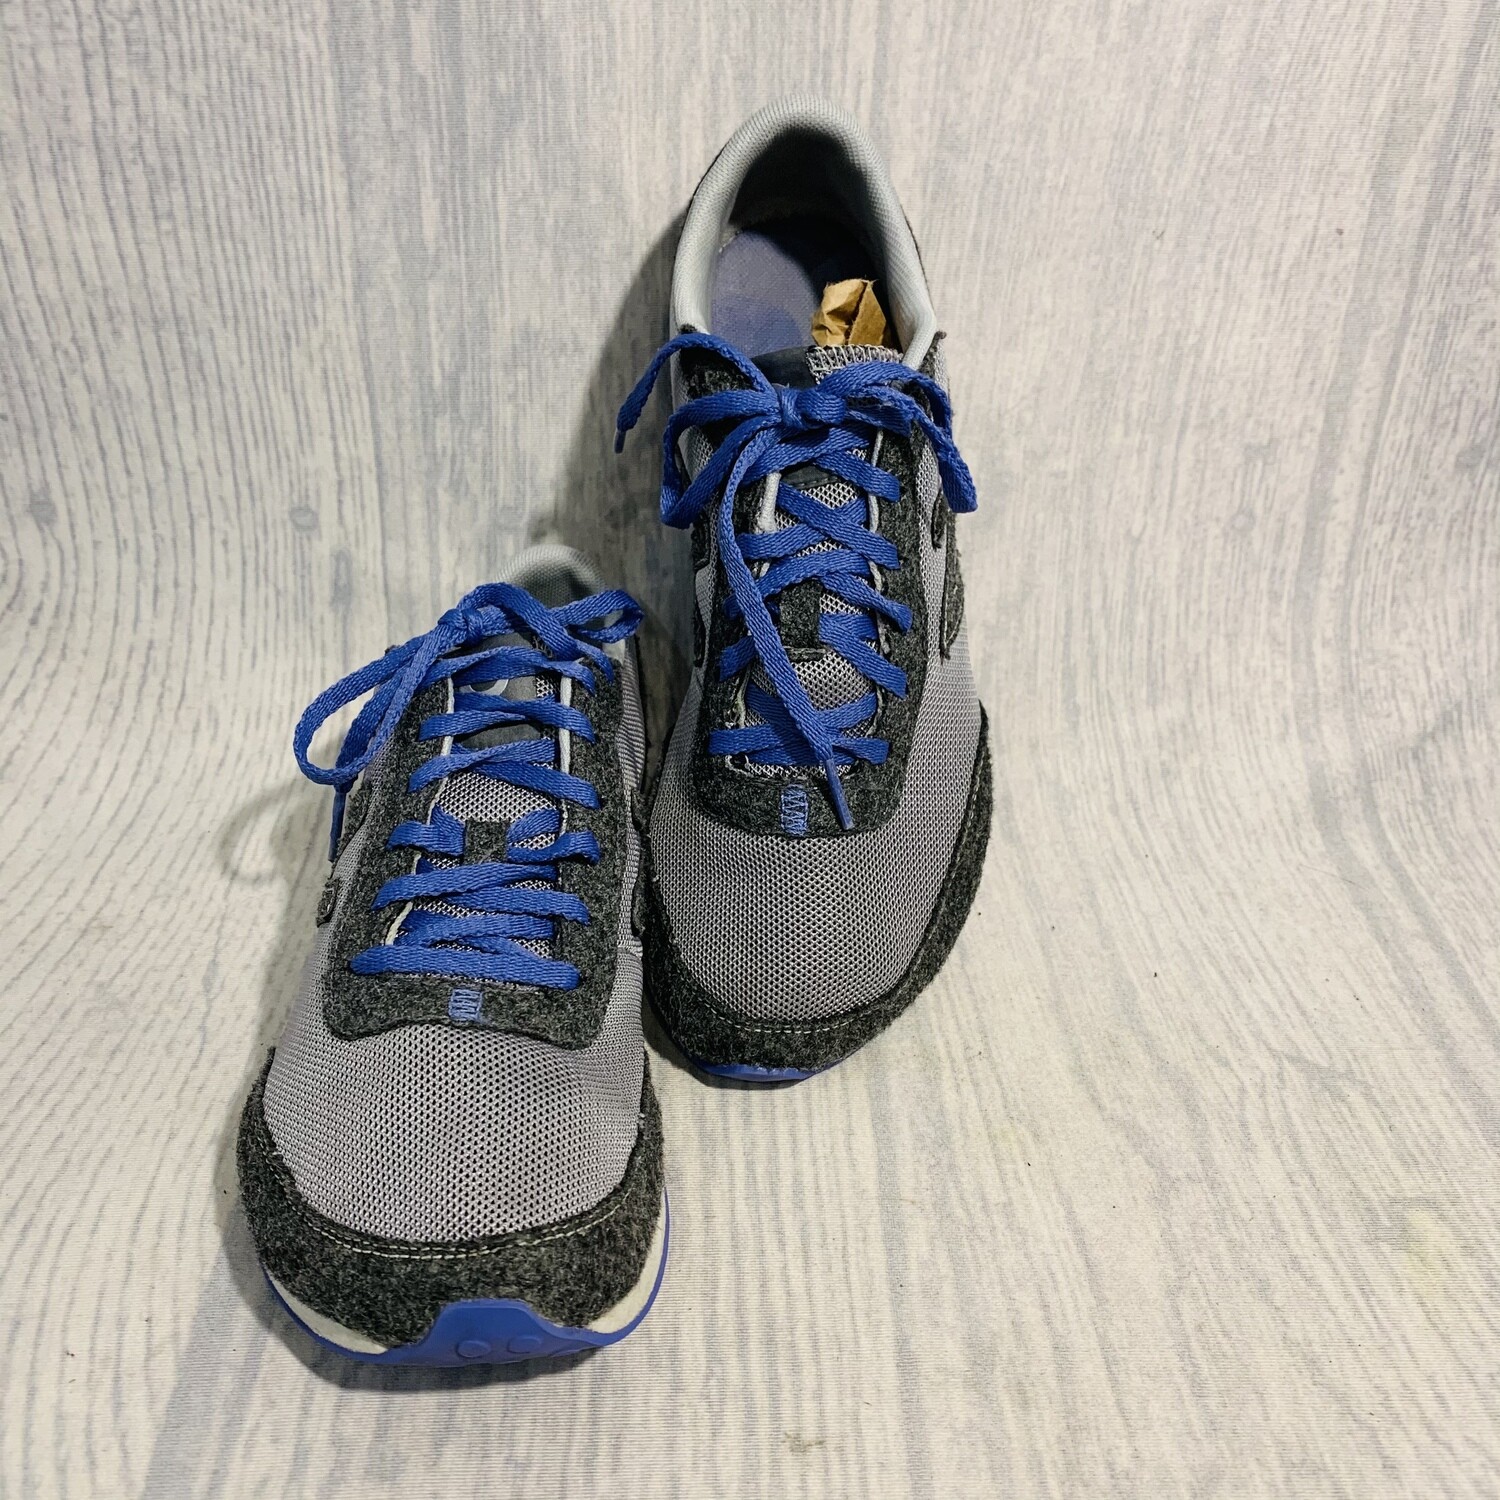 Size 8.5 New Balance Walking Shoe Grey